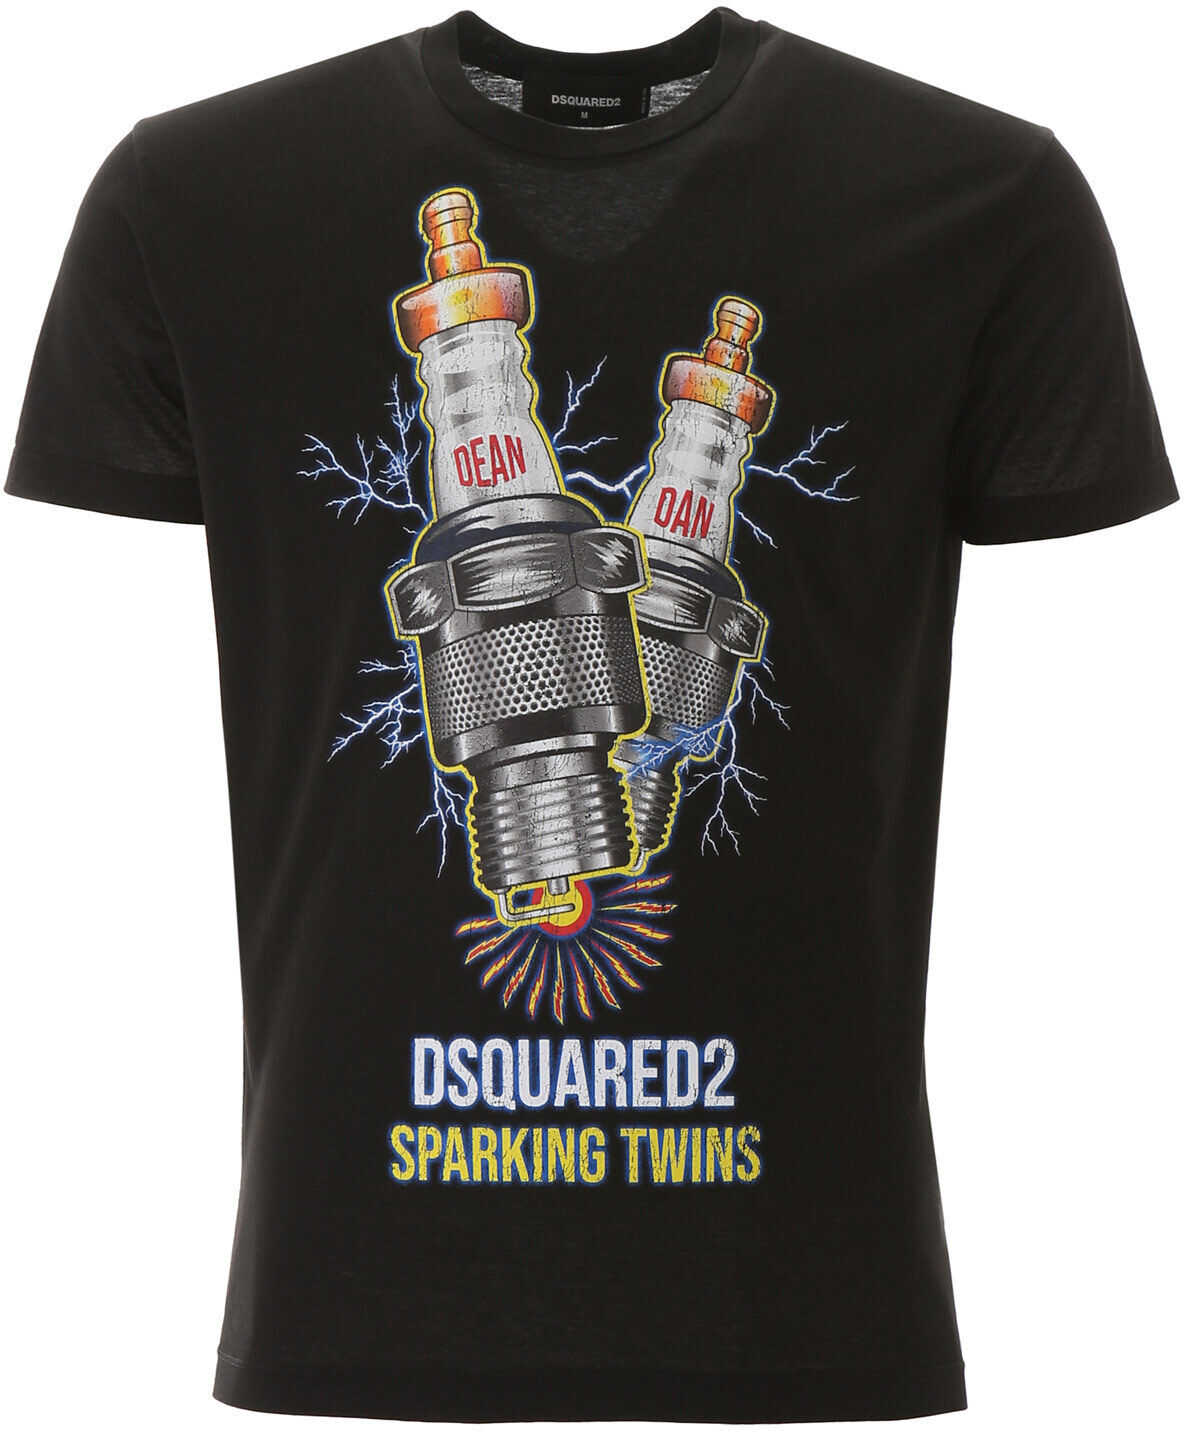 DSQUARED2 Sparking Twins T-Shirt BLACK